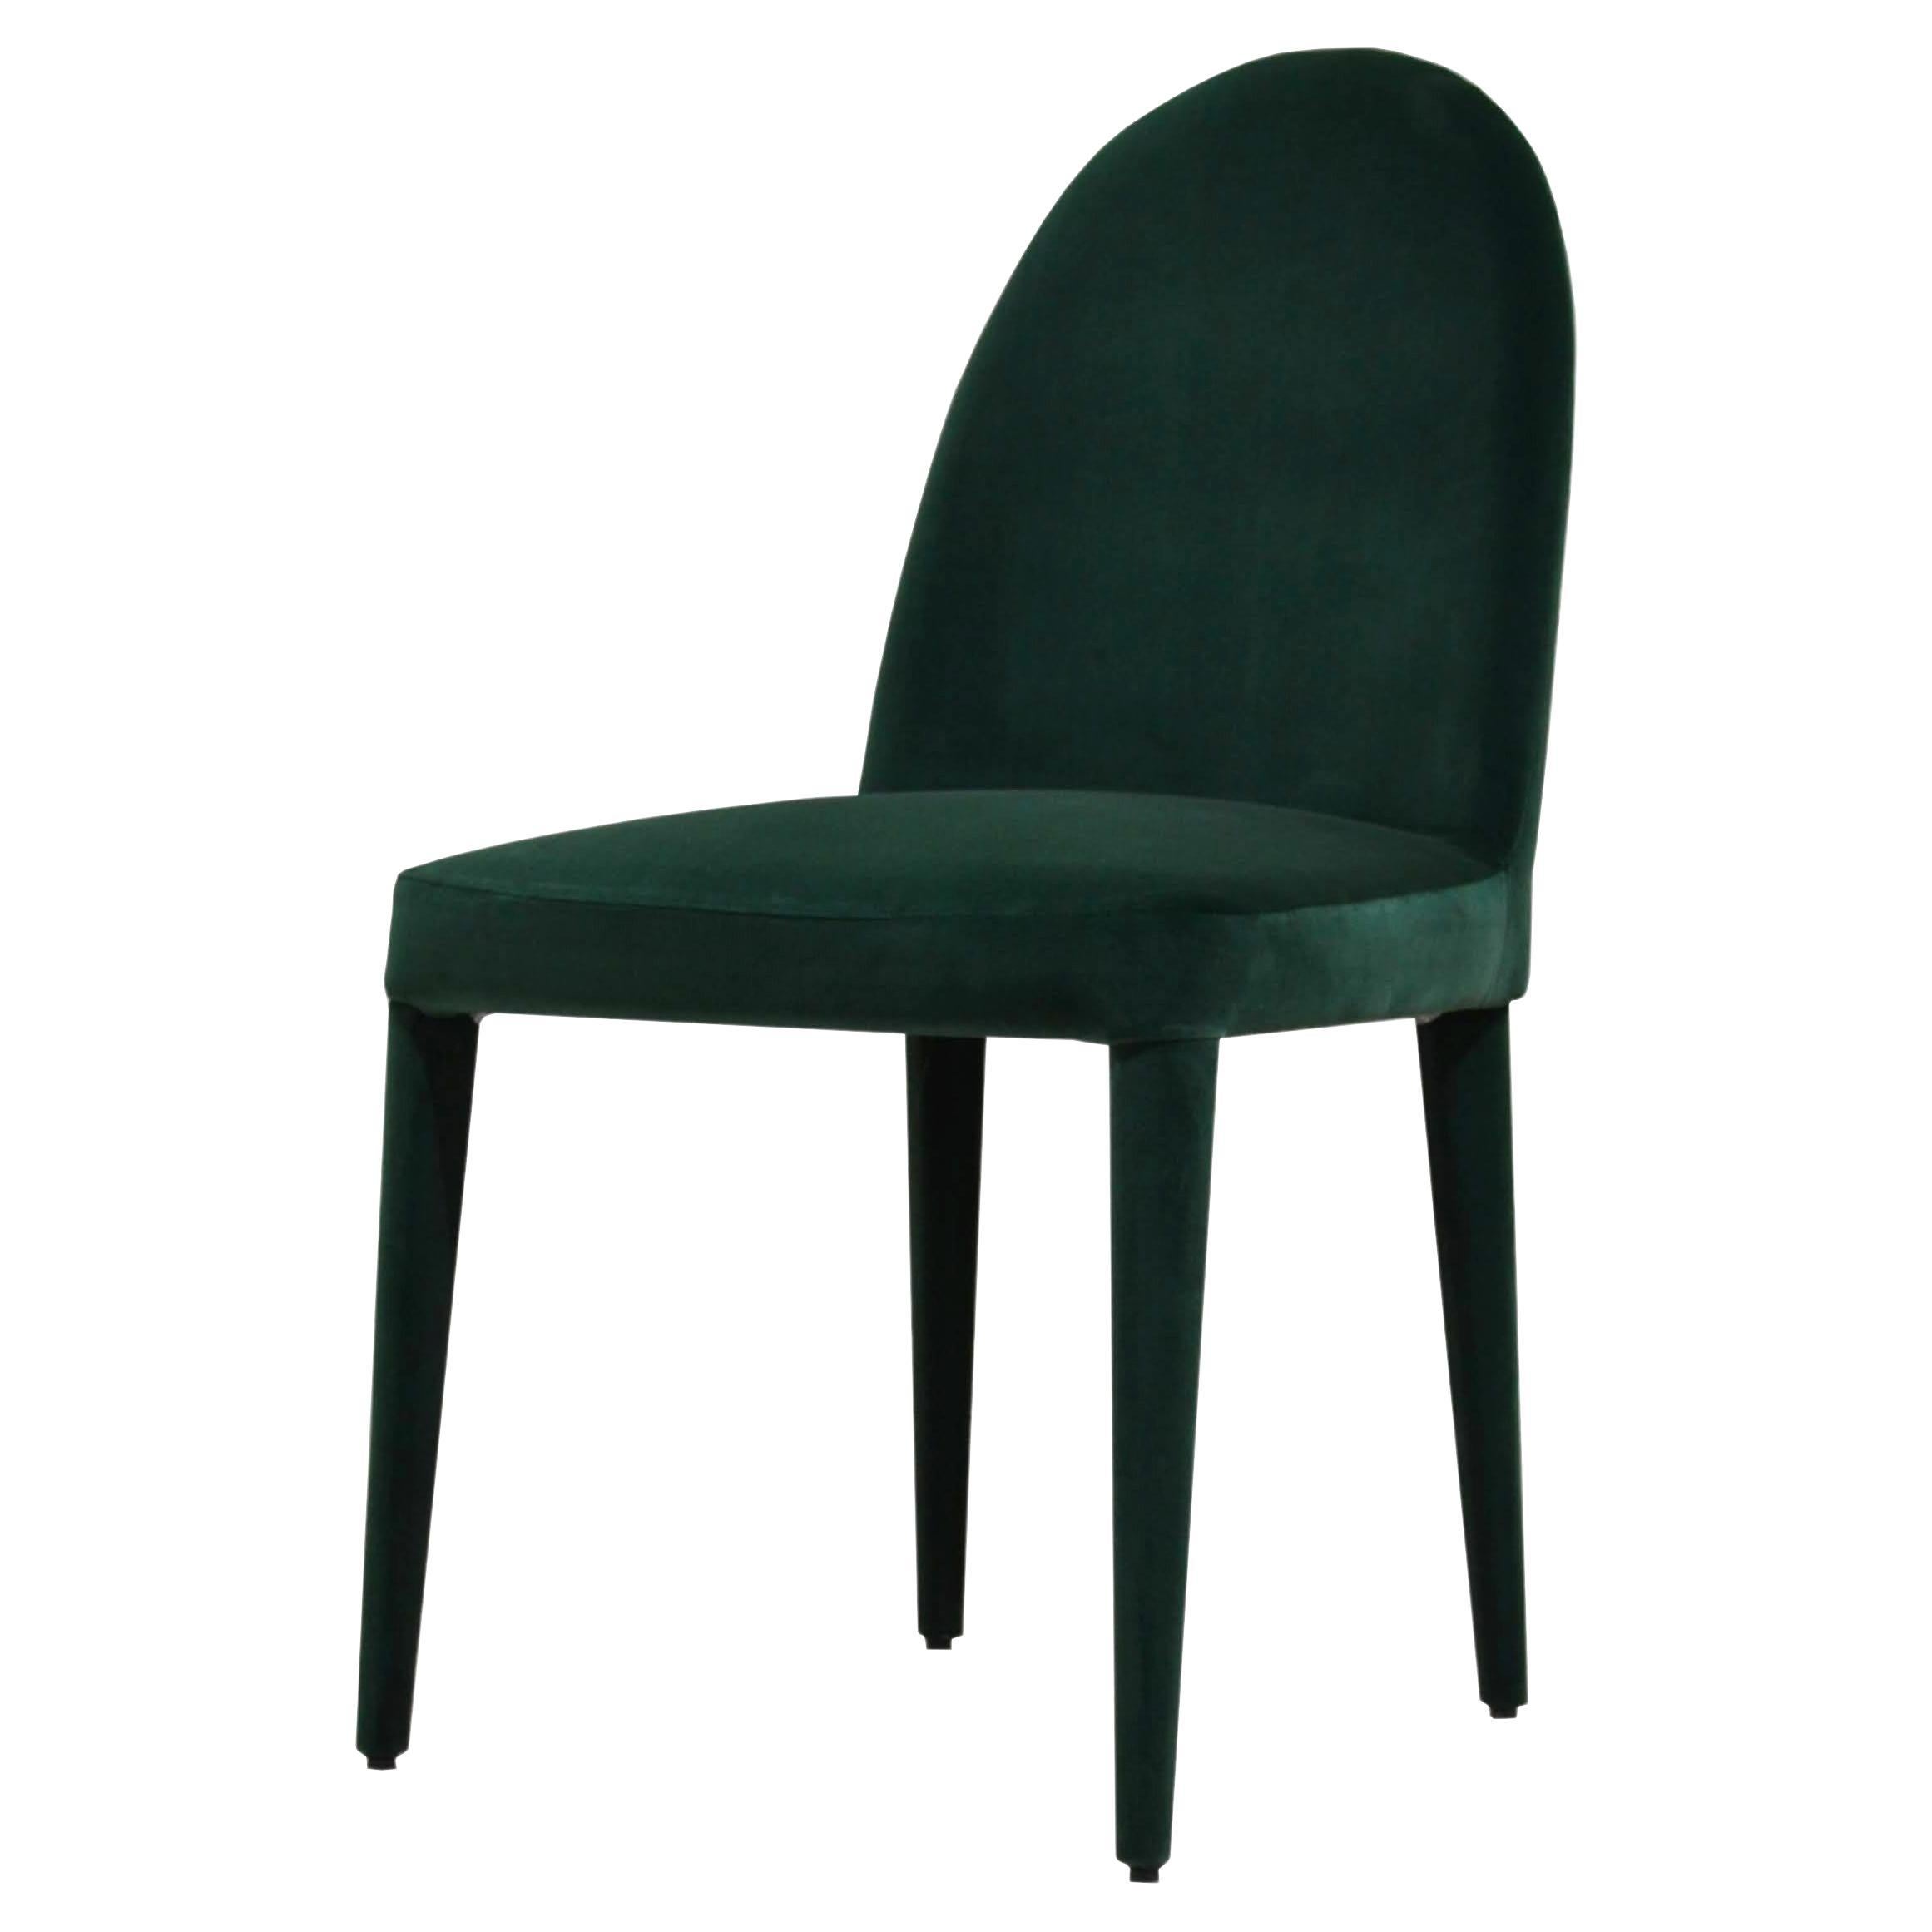 ‘Balzaretti’ XL Contemporary Upholstered Dining Chair in Green Velvet